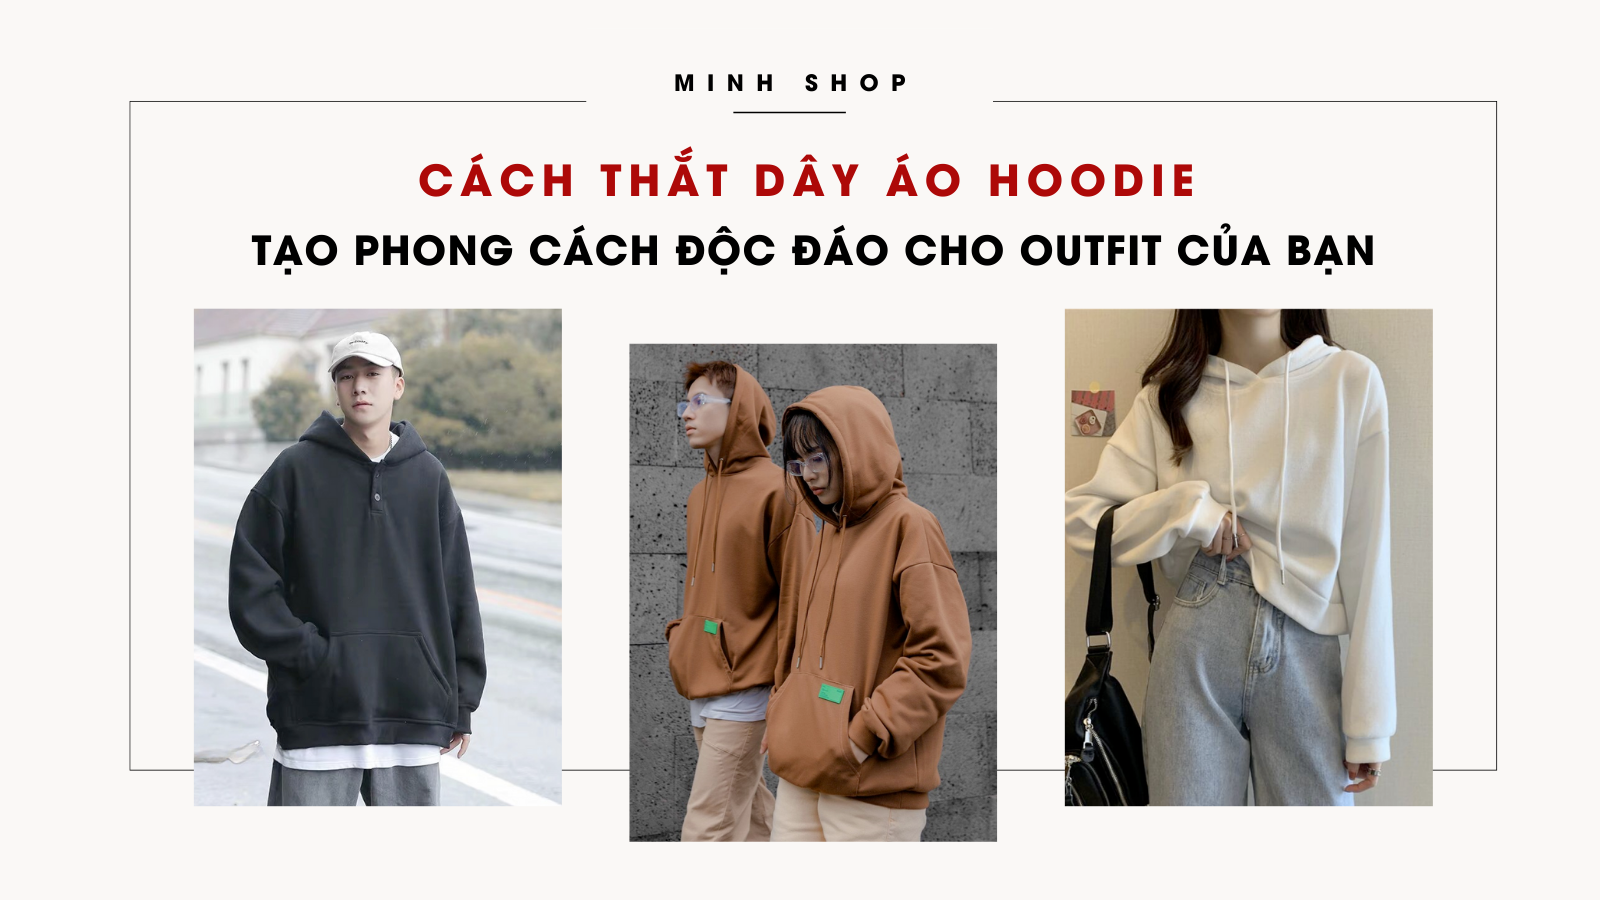 cach-that-day-ao-hoodie-tao-phong-cach-doc-dao-cho-outfit-cua-ban